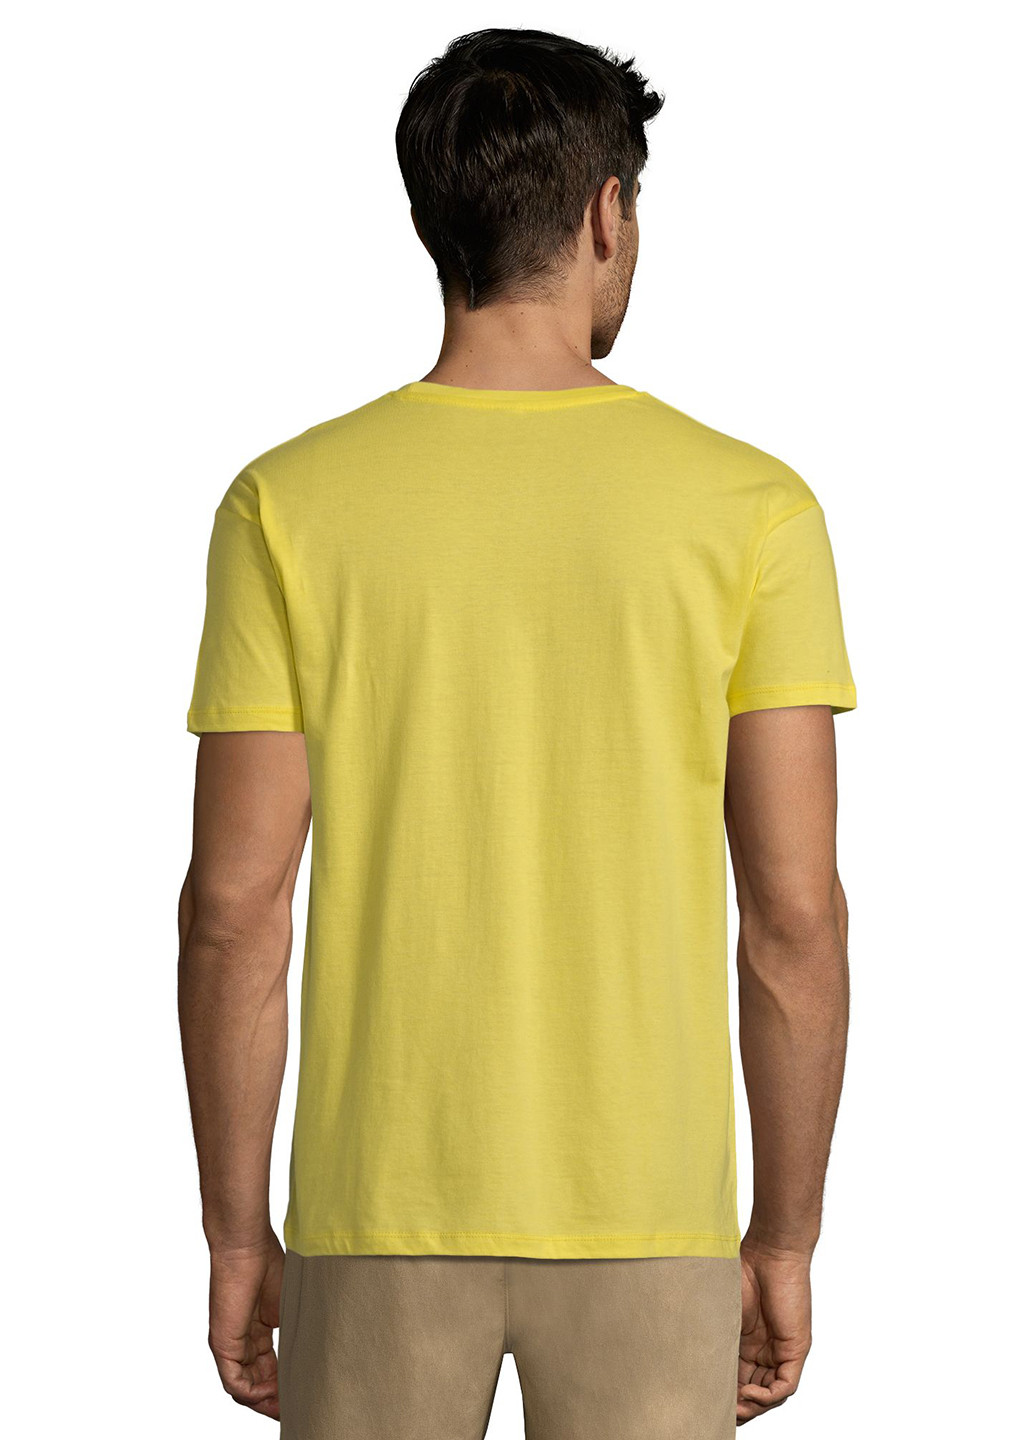 Лимонная футболка Sol's